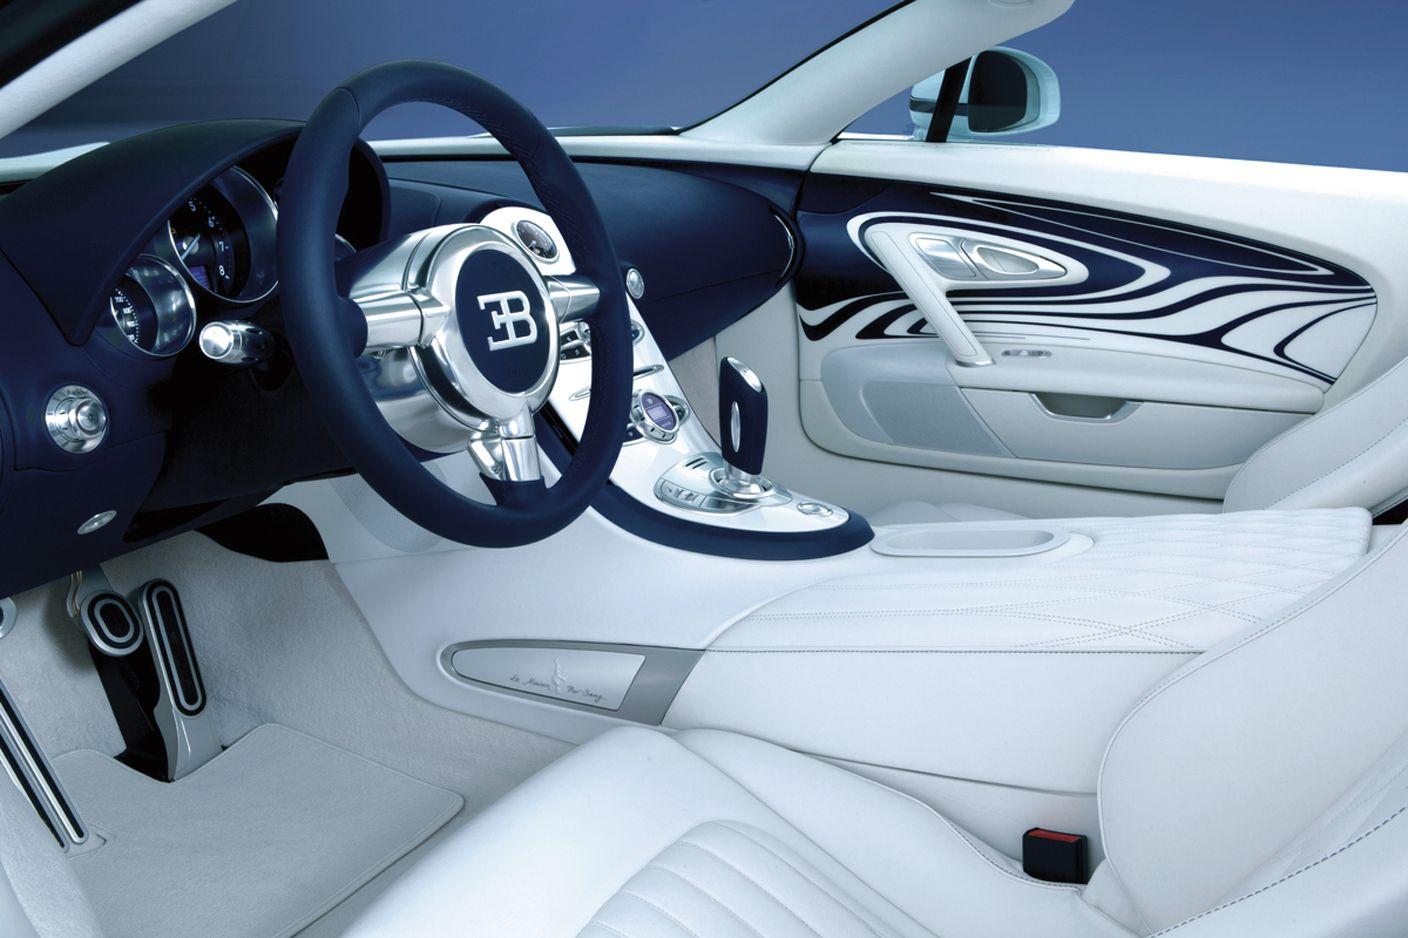 Modern Bugatti Interior Pics At Wallpapers 1080p Car Wallpapers